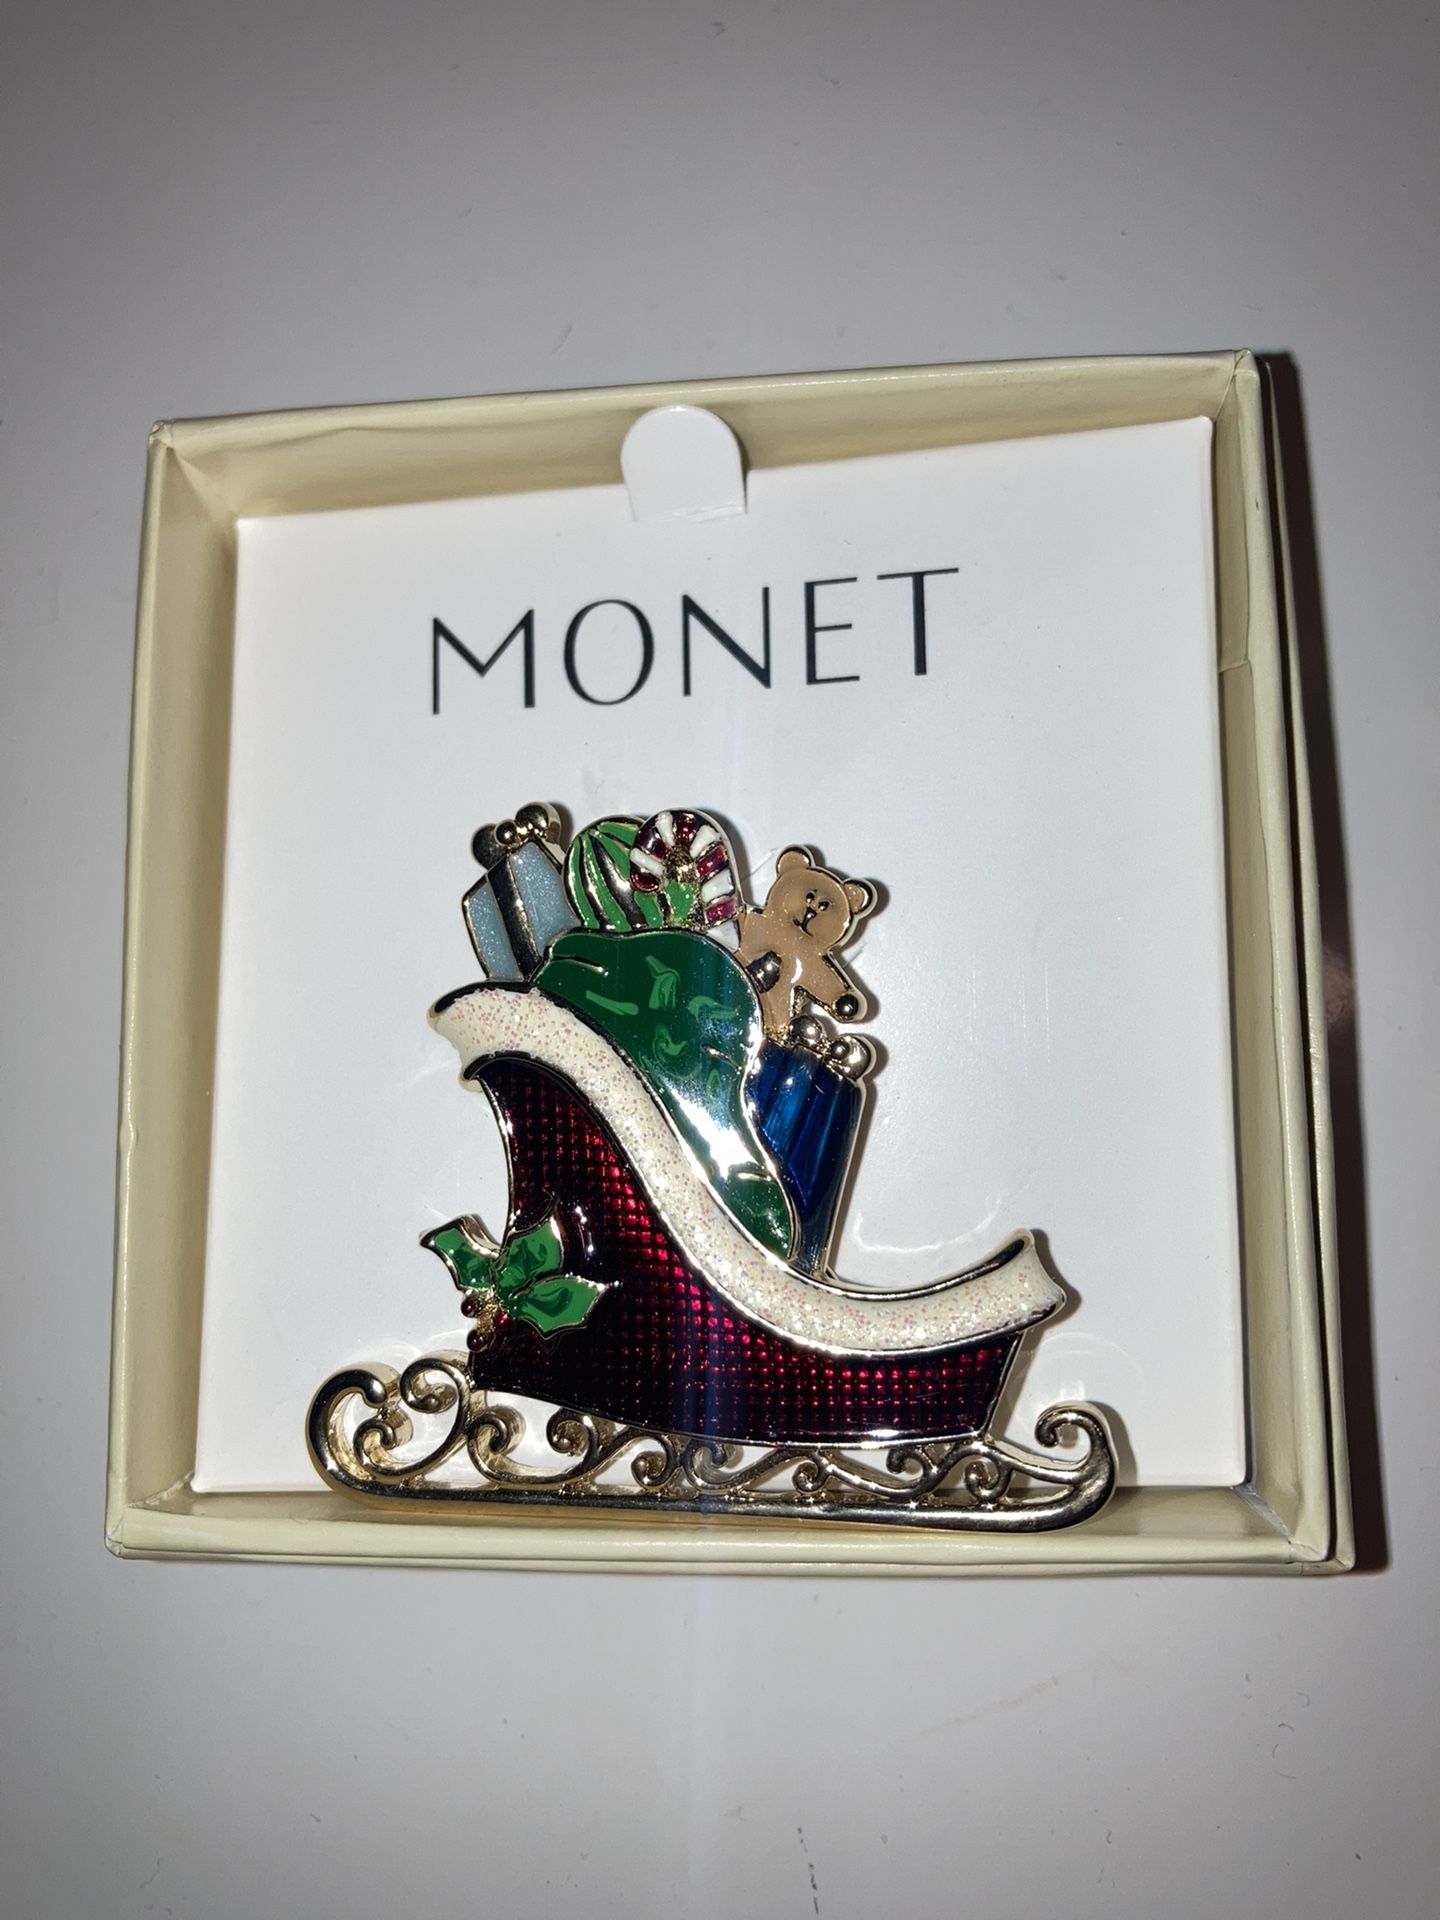 Monet Vintage Christmas Sleigh Pin